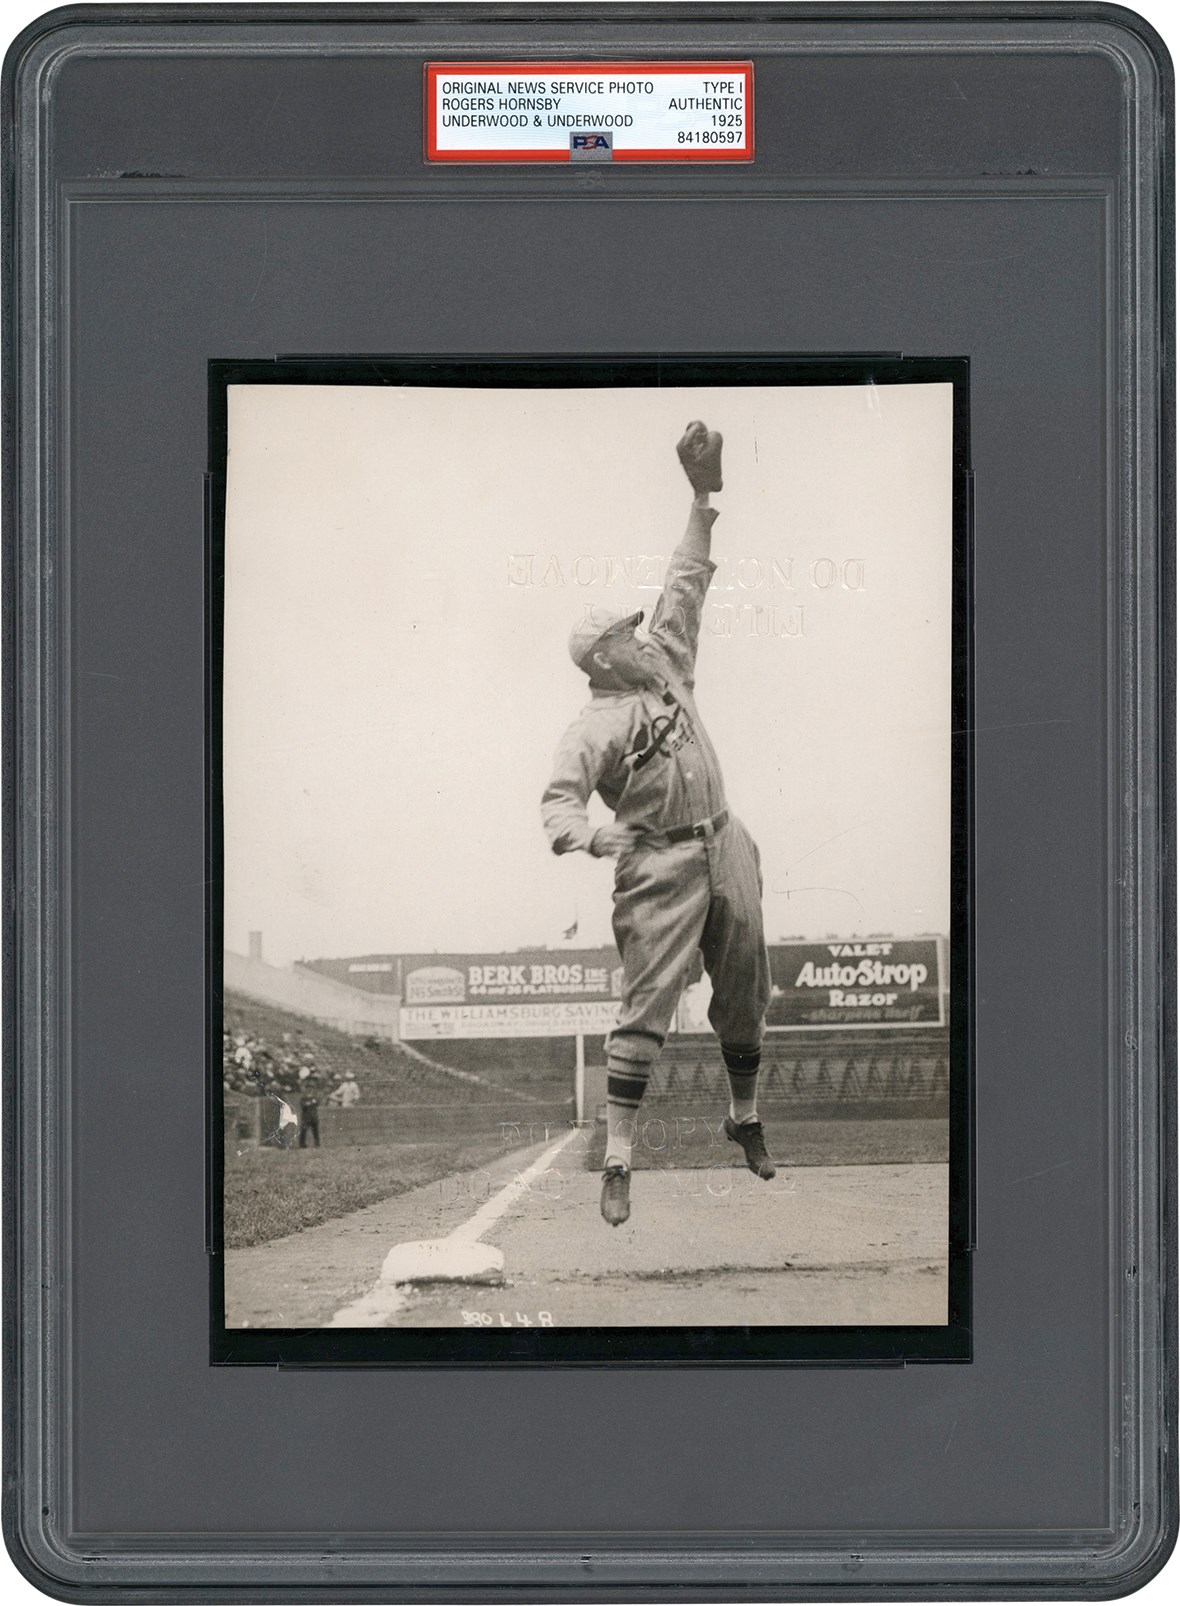 Vintage Sports Photographs - 1925 Rogers Hornsby Original Photograph - Underwood & Underwood File Copy (PSA Type I)